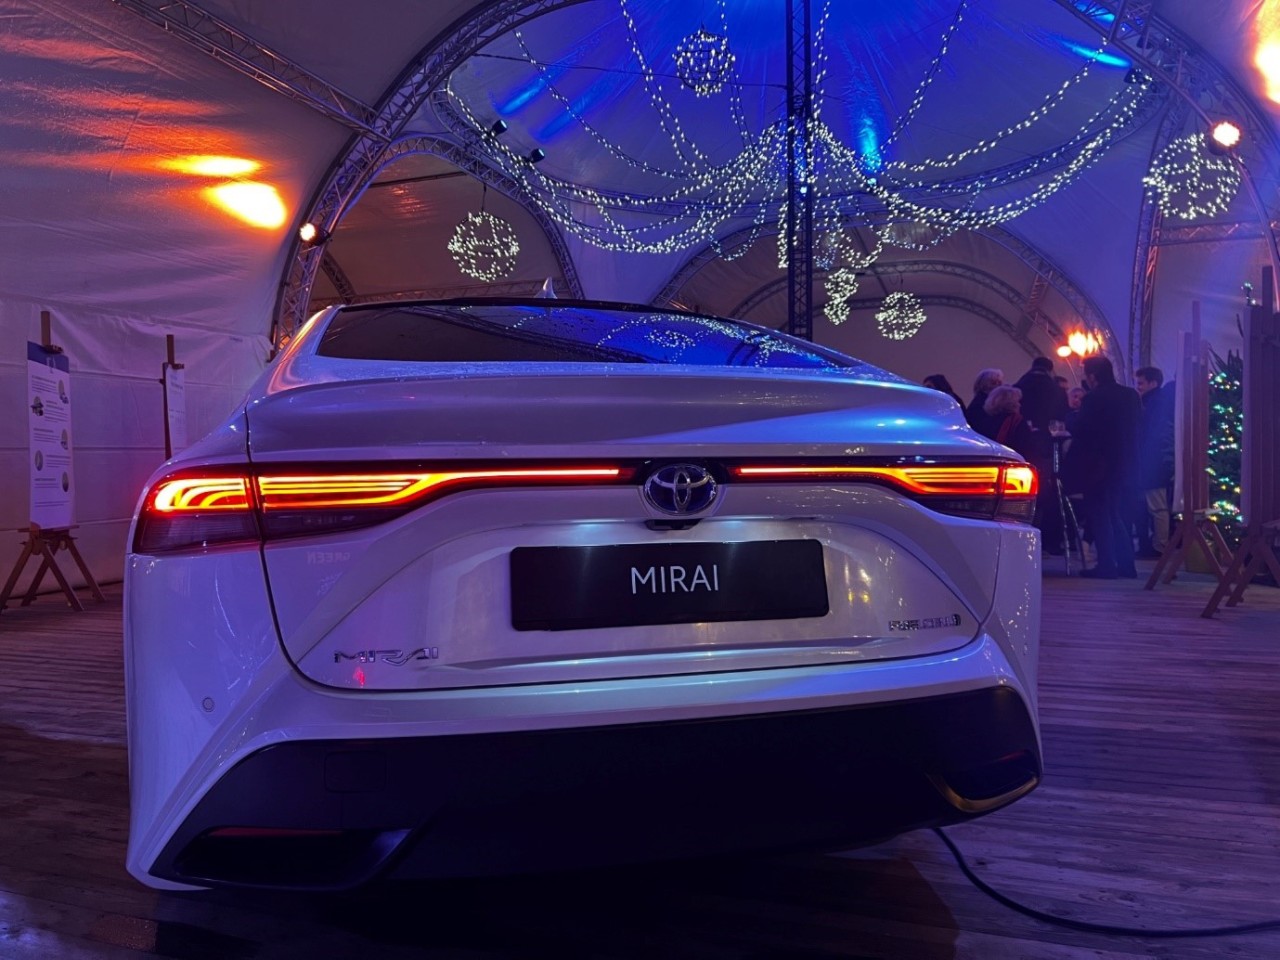 Toyota Mirai lights up festivities in Brussels